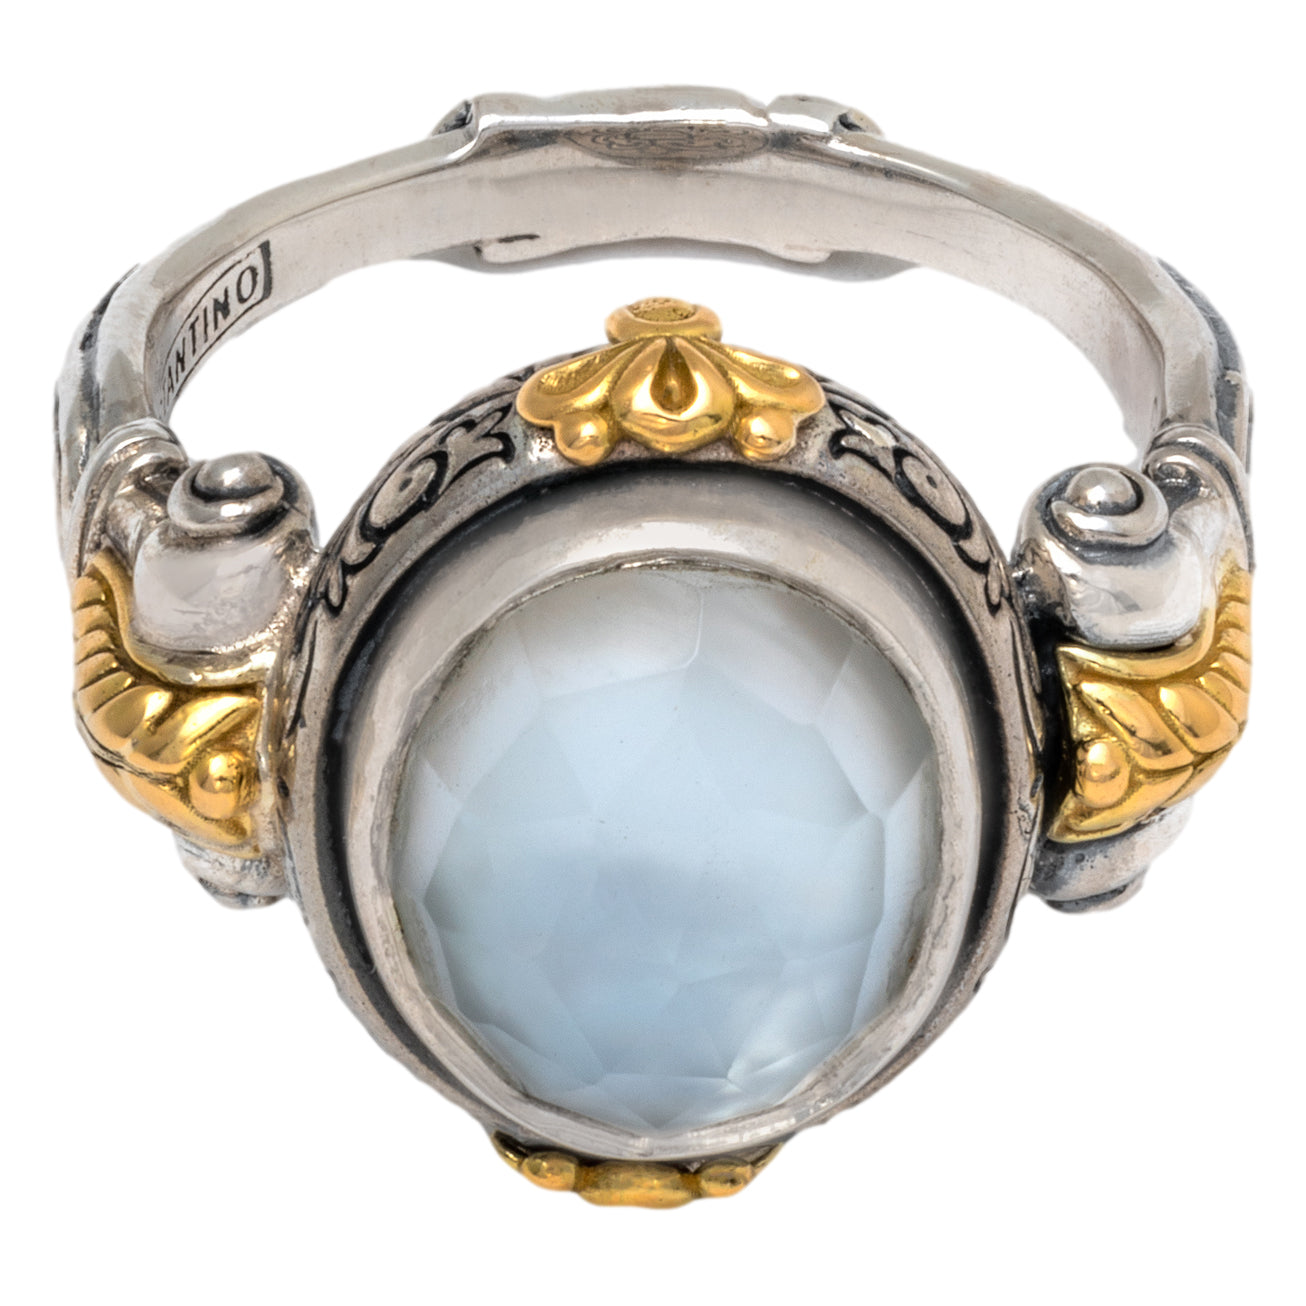 Konstantino Women's Doublet Ring, Light Blue, Hestia Collection